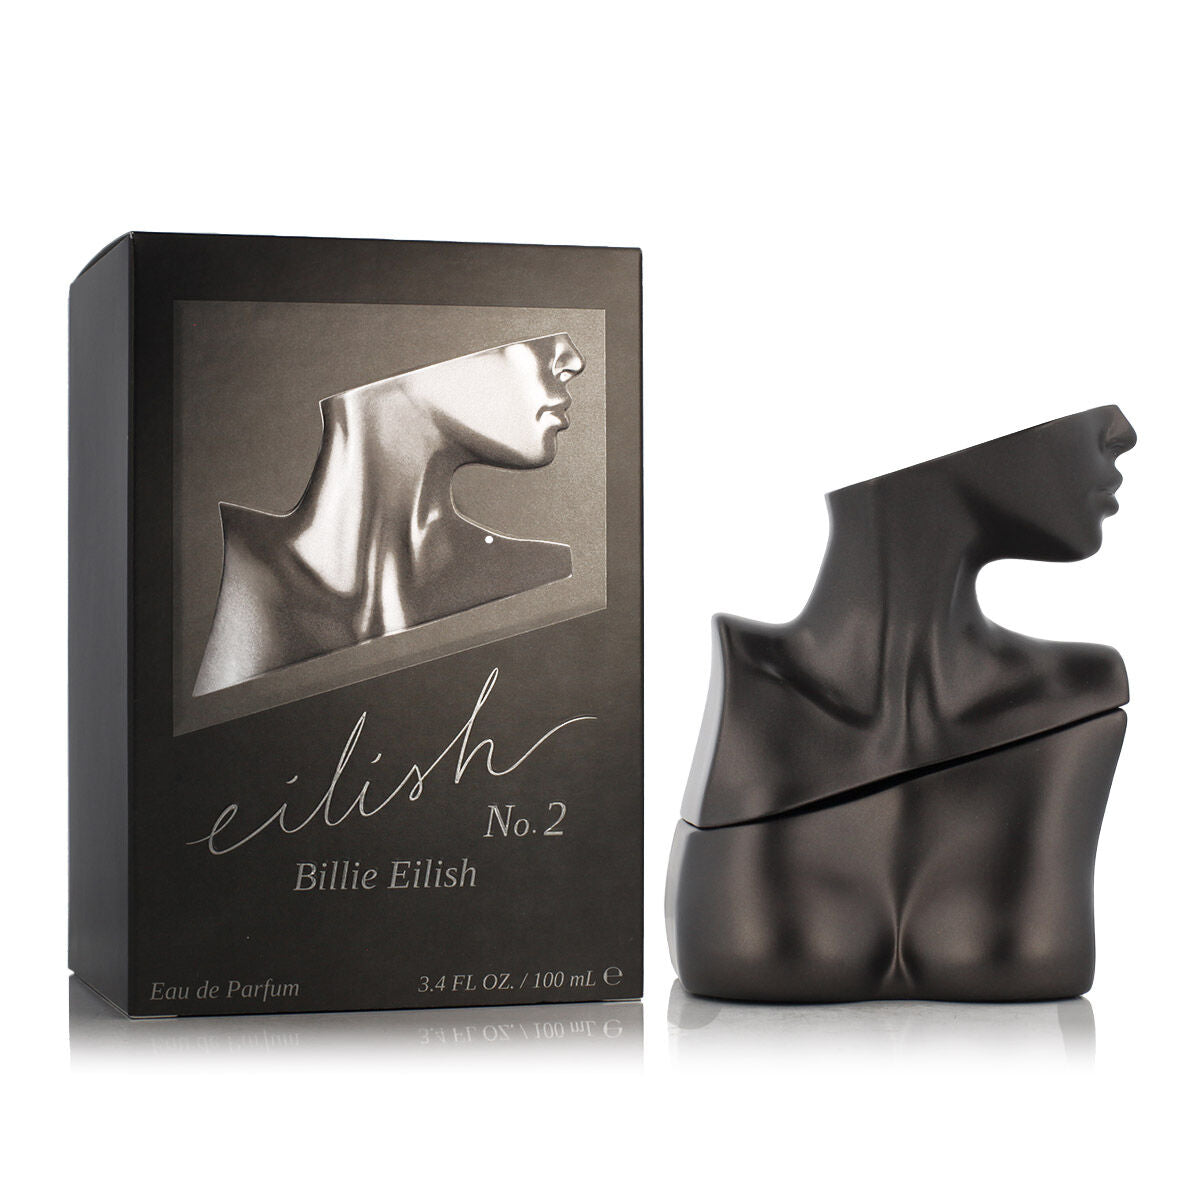 Perfume unisexe Billie Eilish Edp Eilish nº 2 100 ml